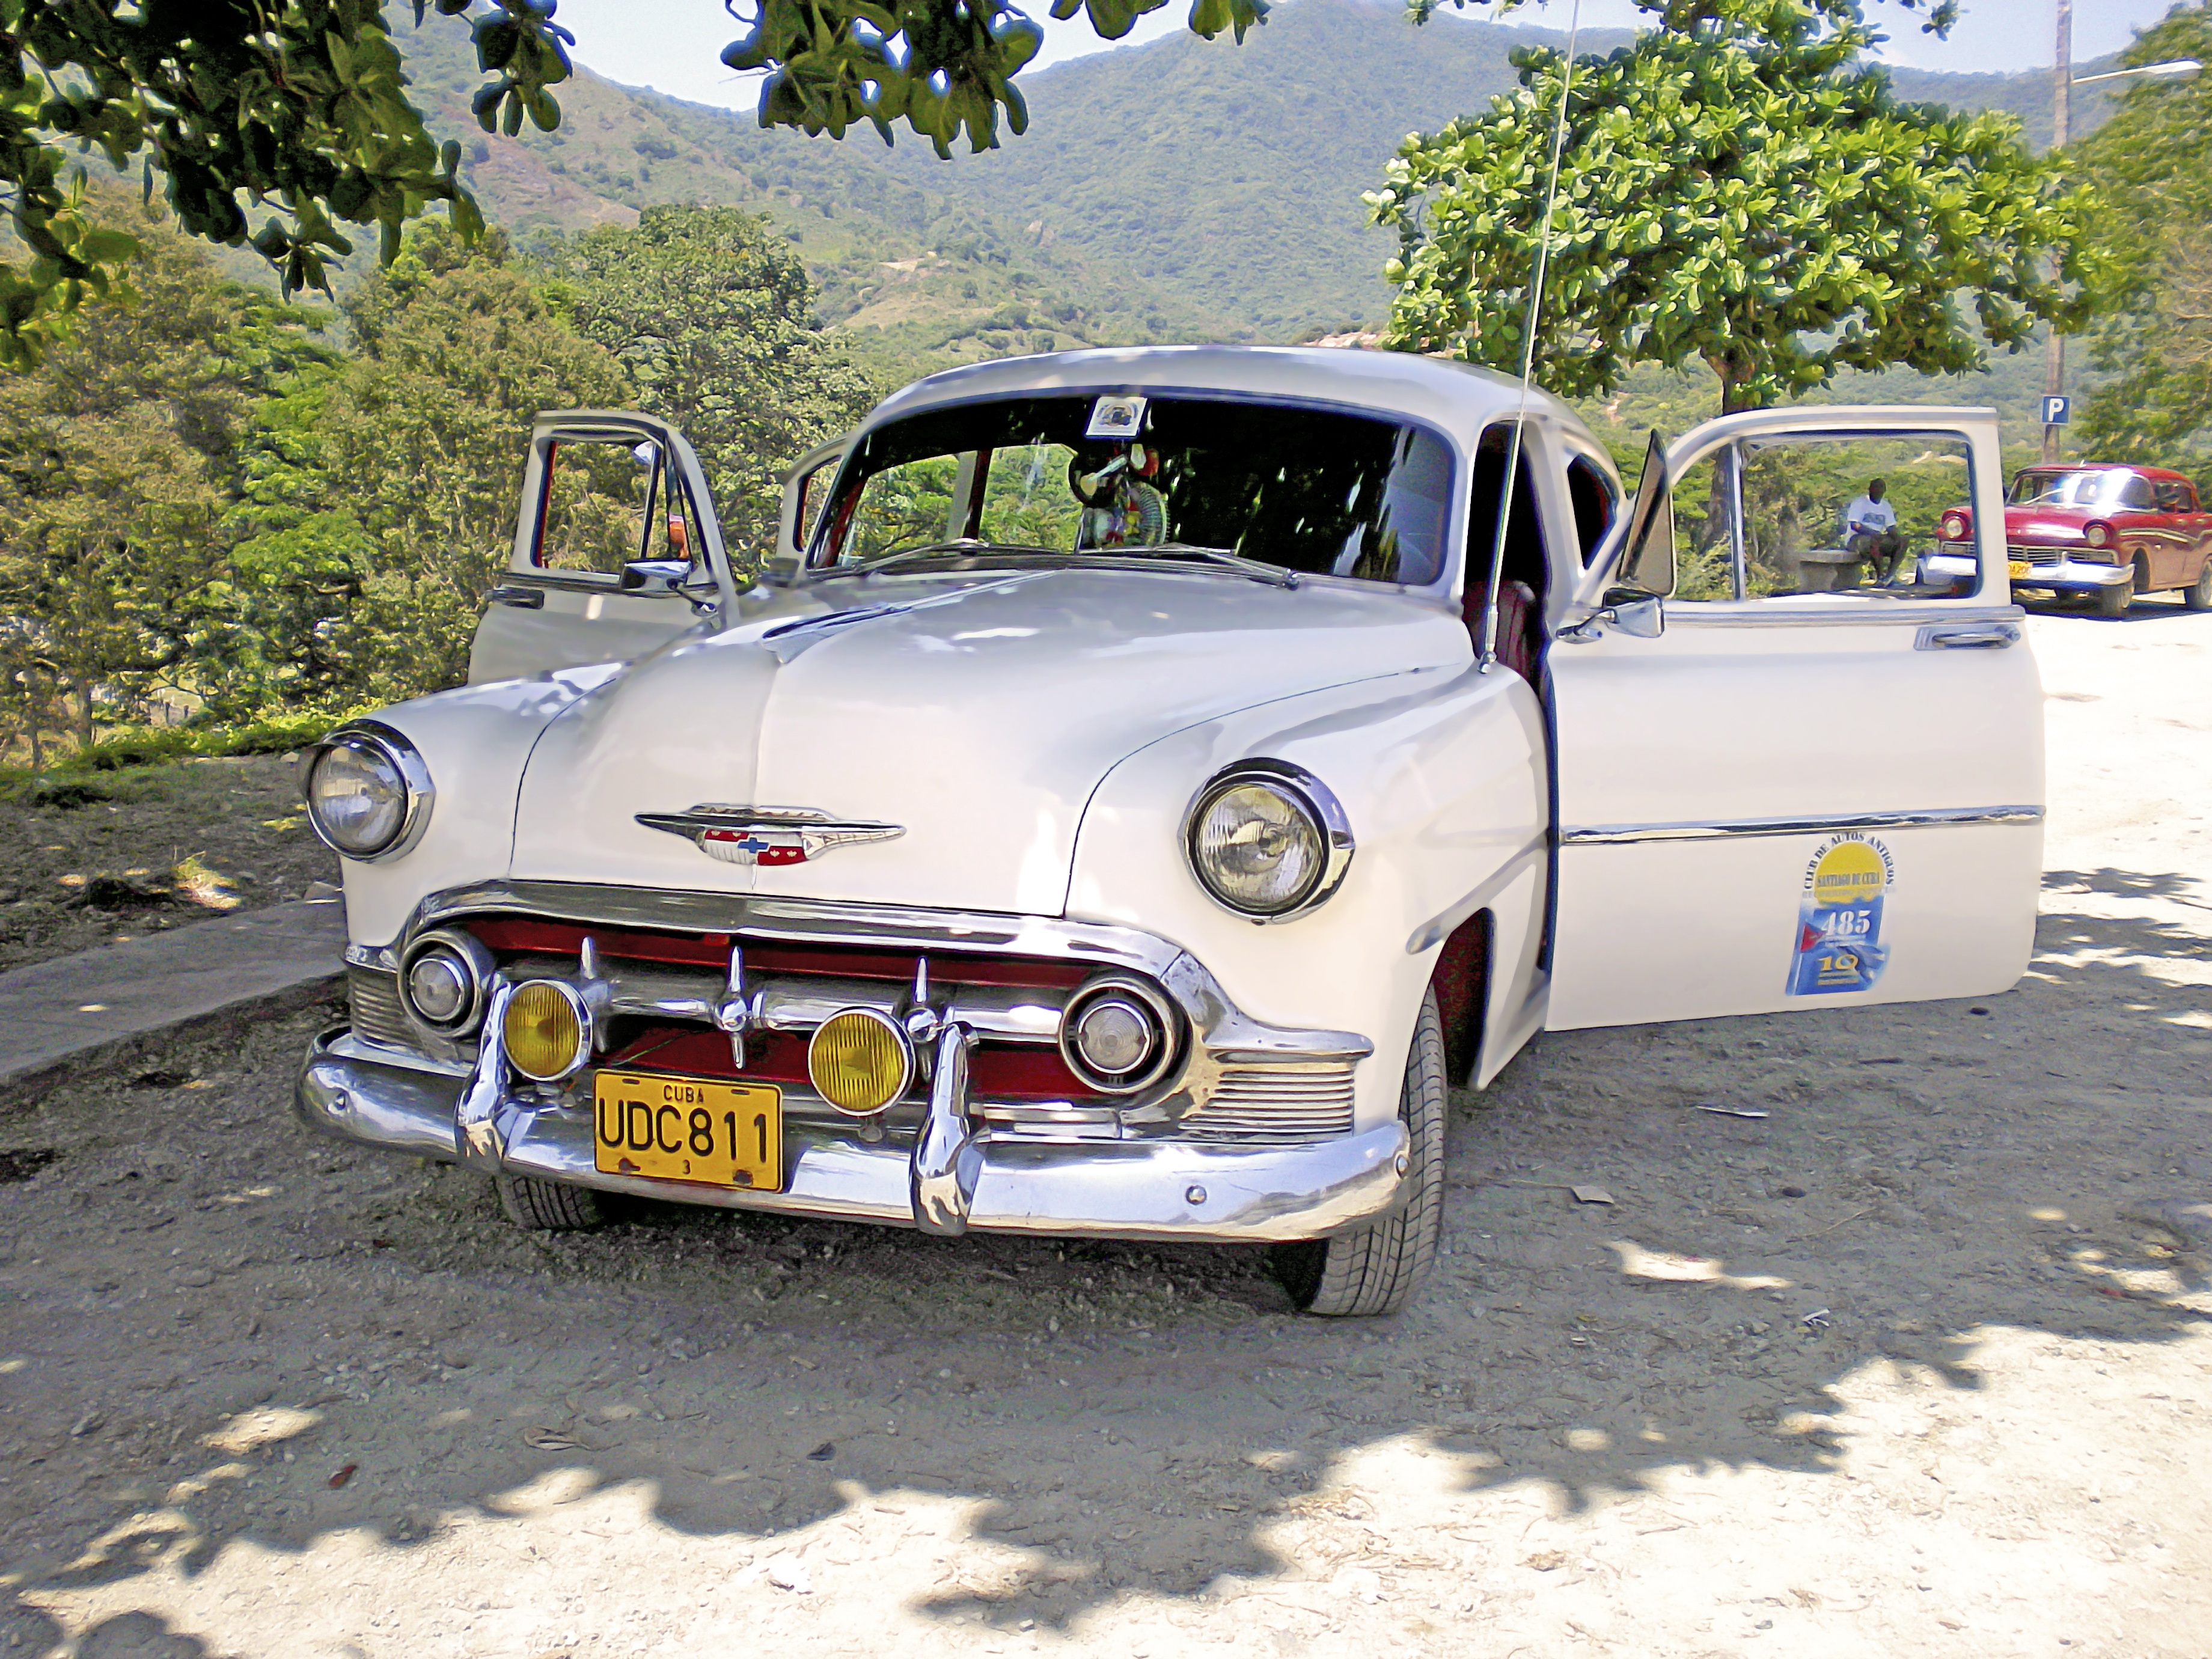 Бесплатное фото Ретроавтомобиль Chevrolet на Кубе